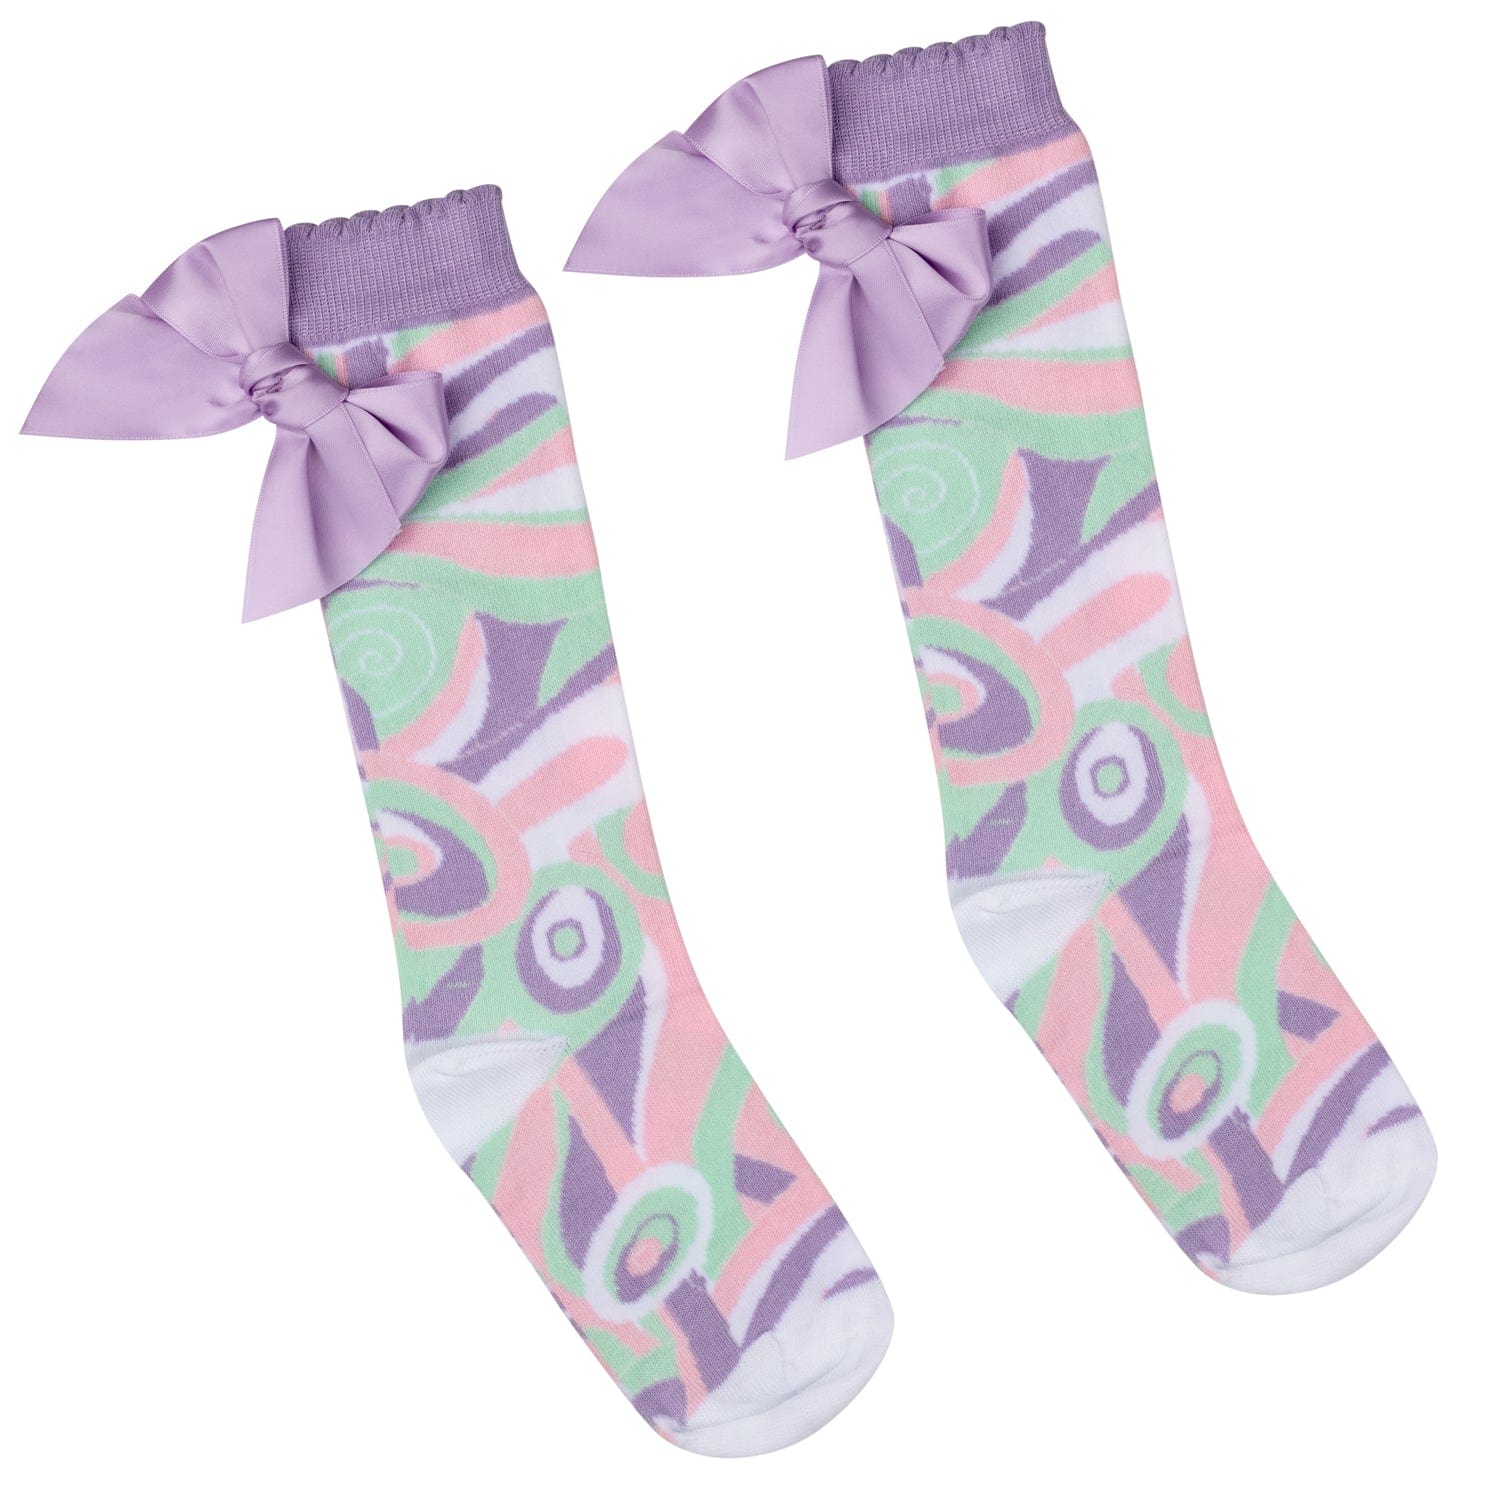 A DEE - Noelle Popping Pastels Print Knee High Socks  - Lilac